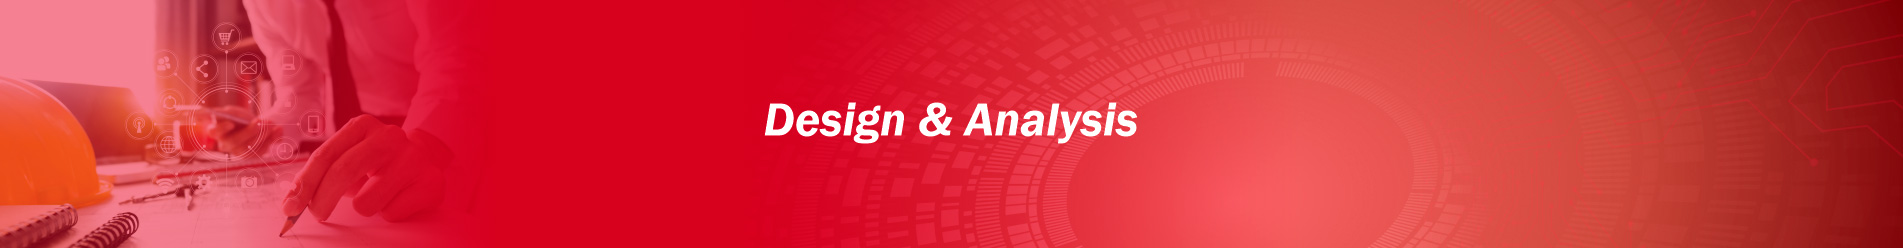 Design & Analysis